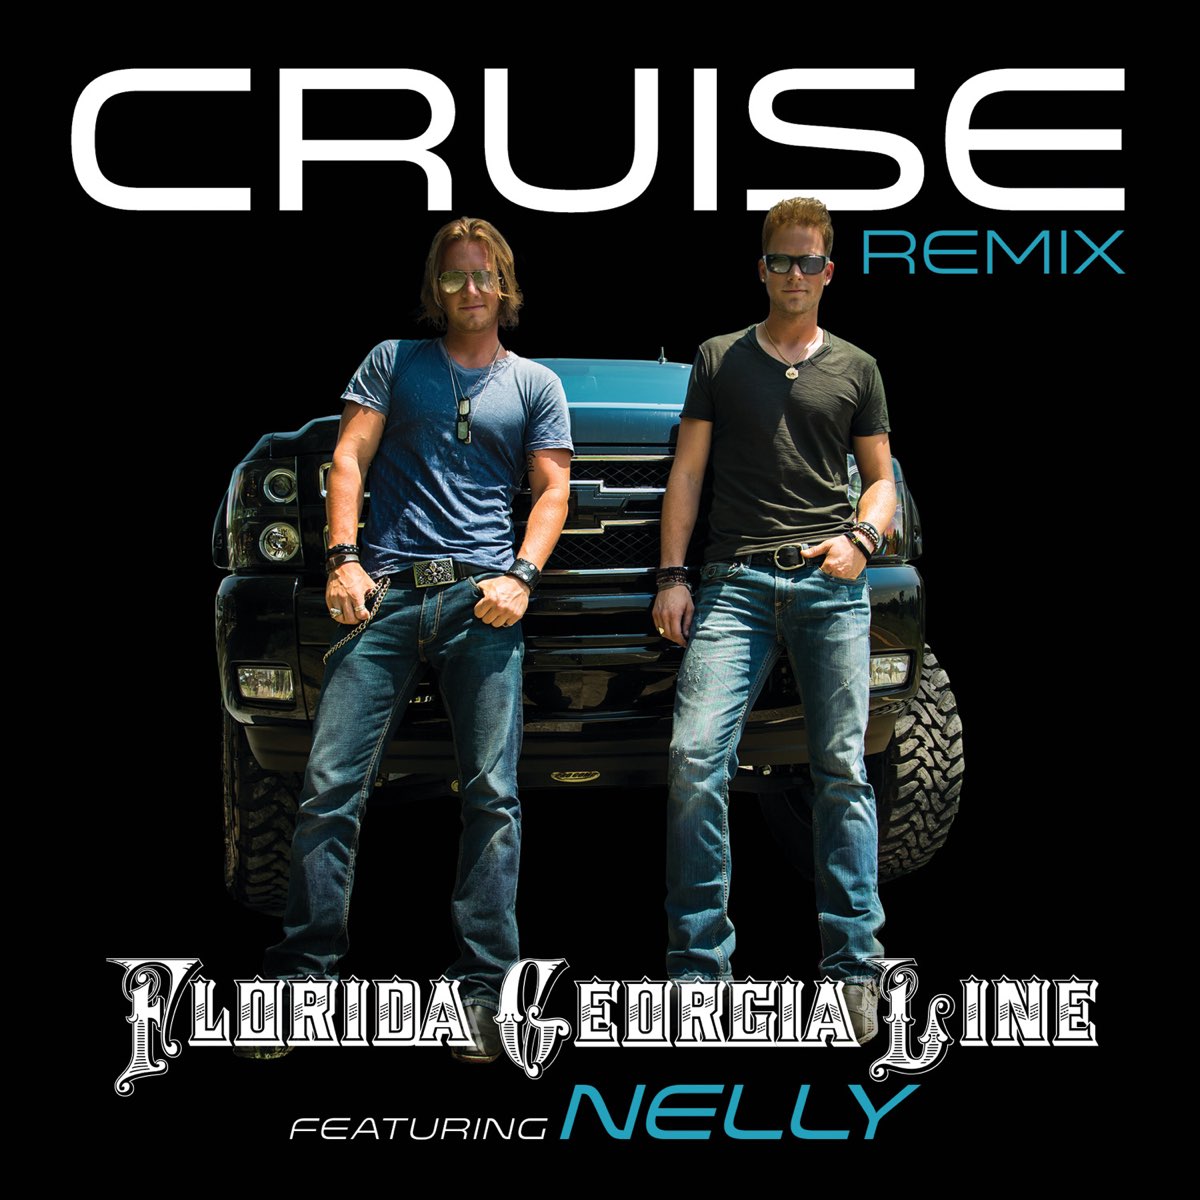 florida georgia line cruise (remix) ft. nelly